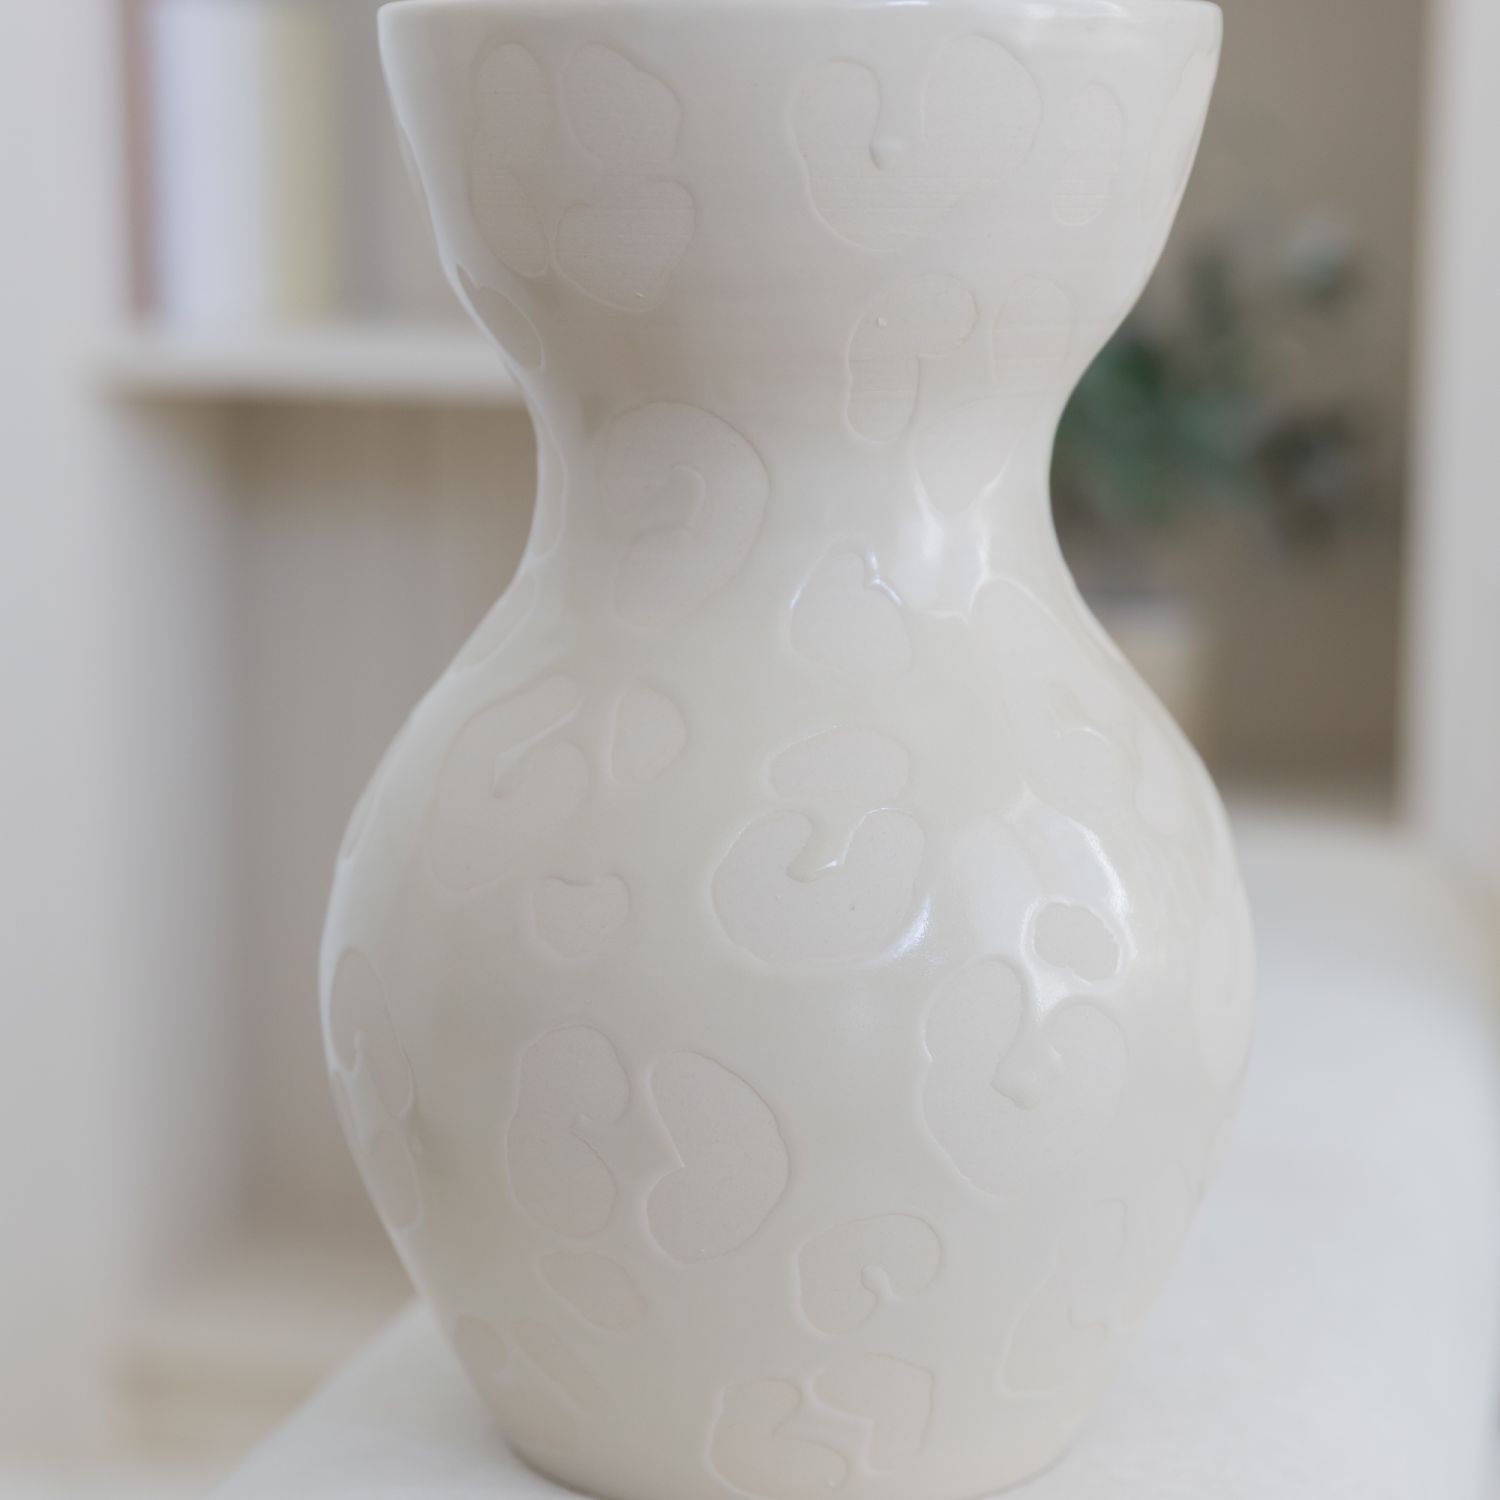 Mima Ceramics: White Print Vessel no. 2 Product Image 1 of 3